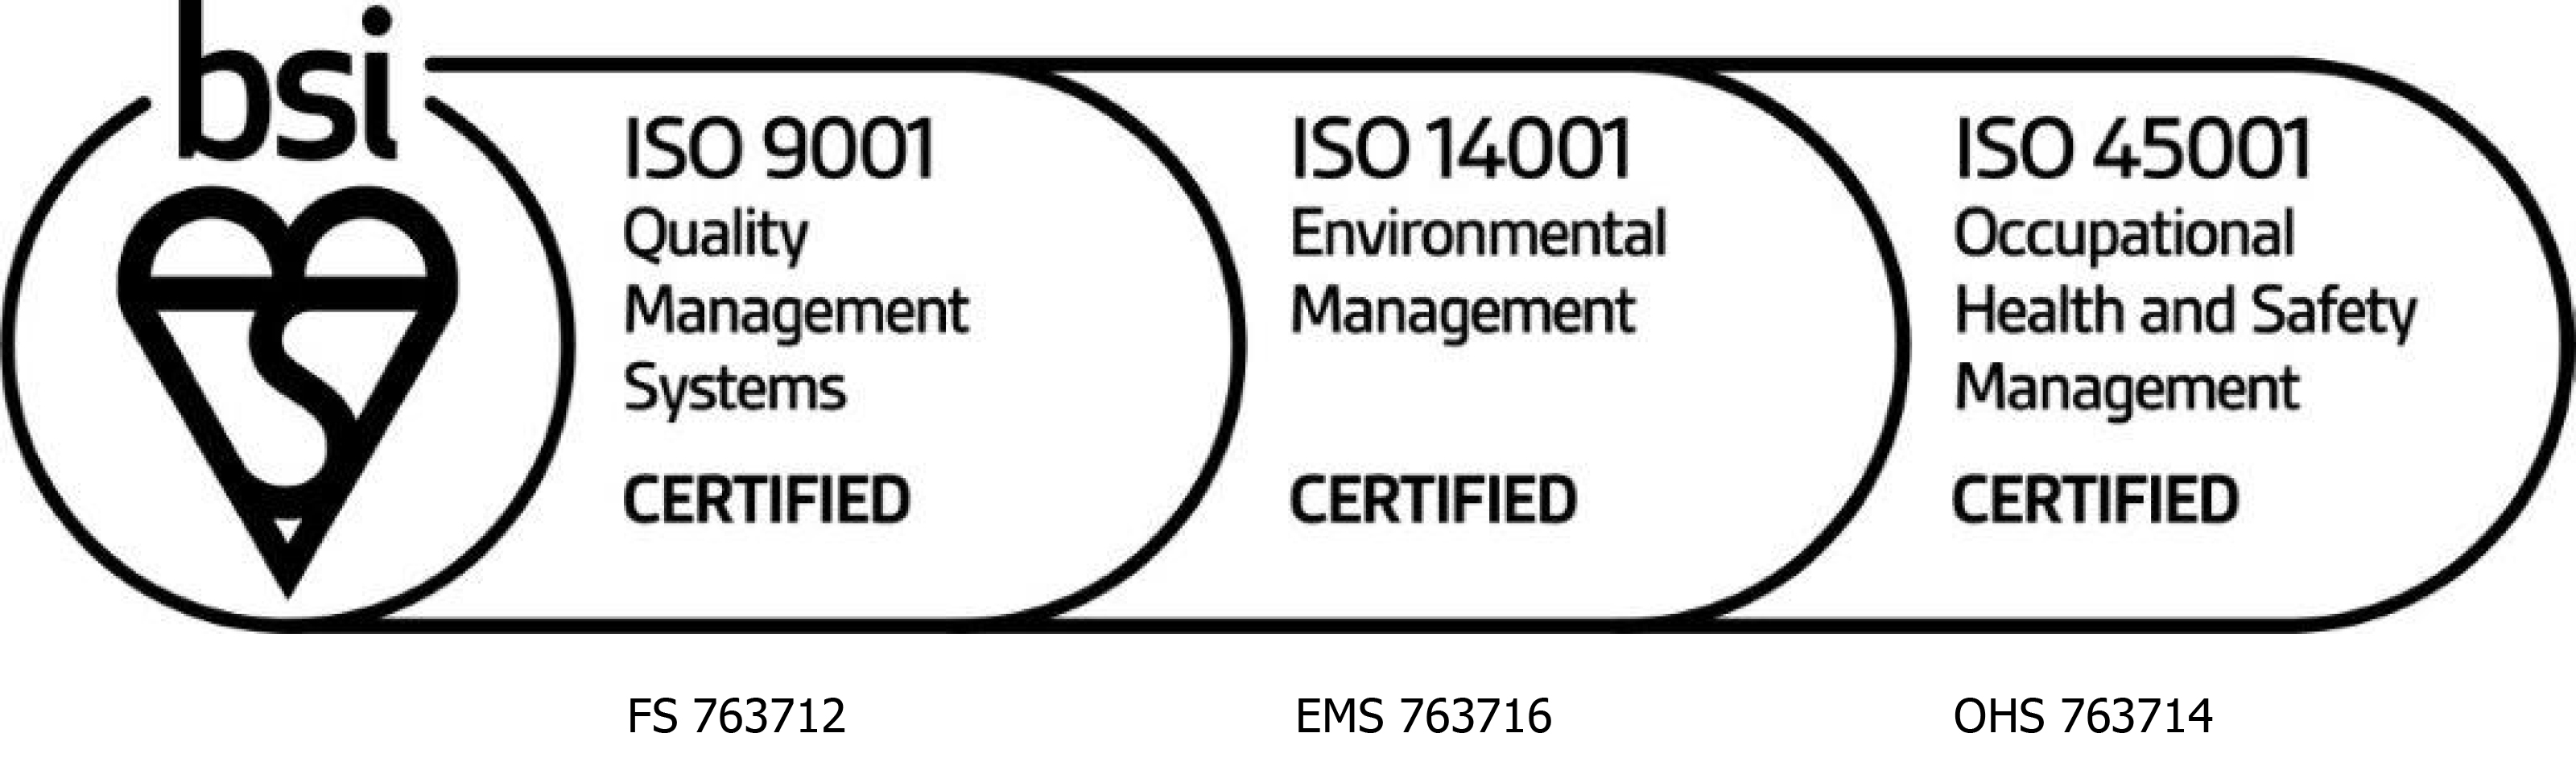 ISO 9001 14001 45001 En GB 0321 with Certificate Numbers